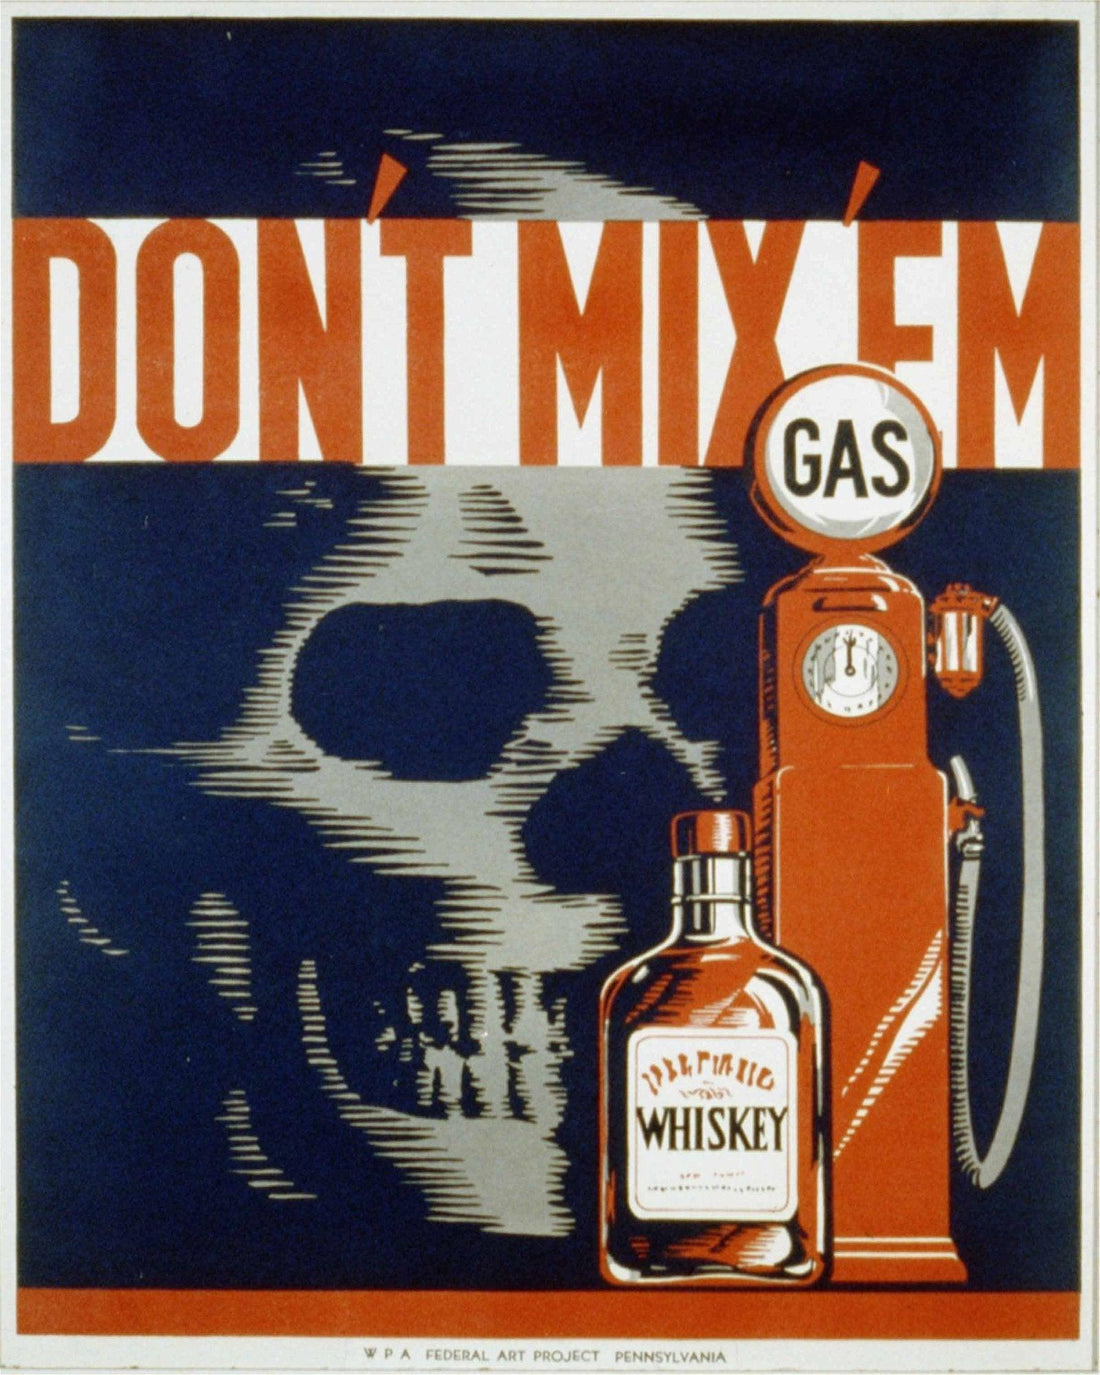 Vintage Metal Sign - Retro Advertising - Skull Gas Whiskey - £27.99 - Retro Advertising 